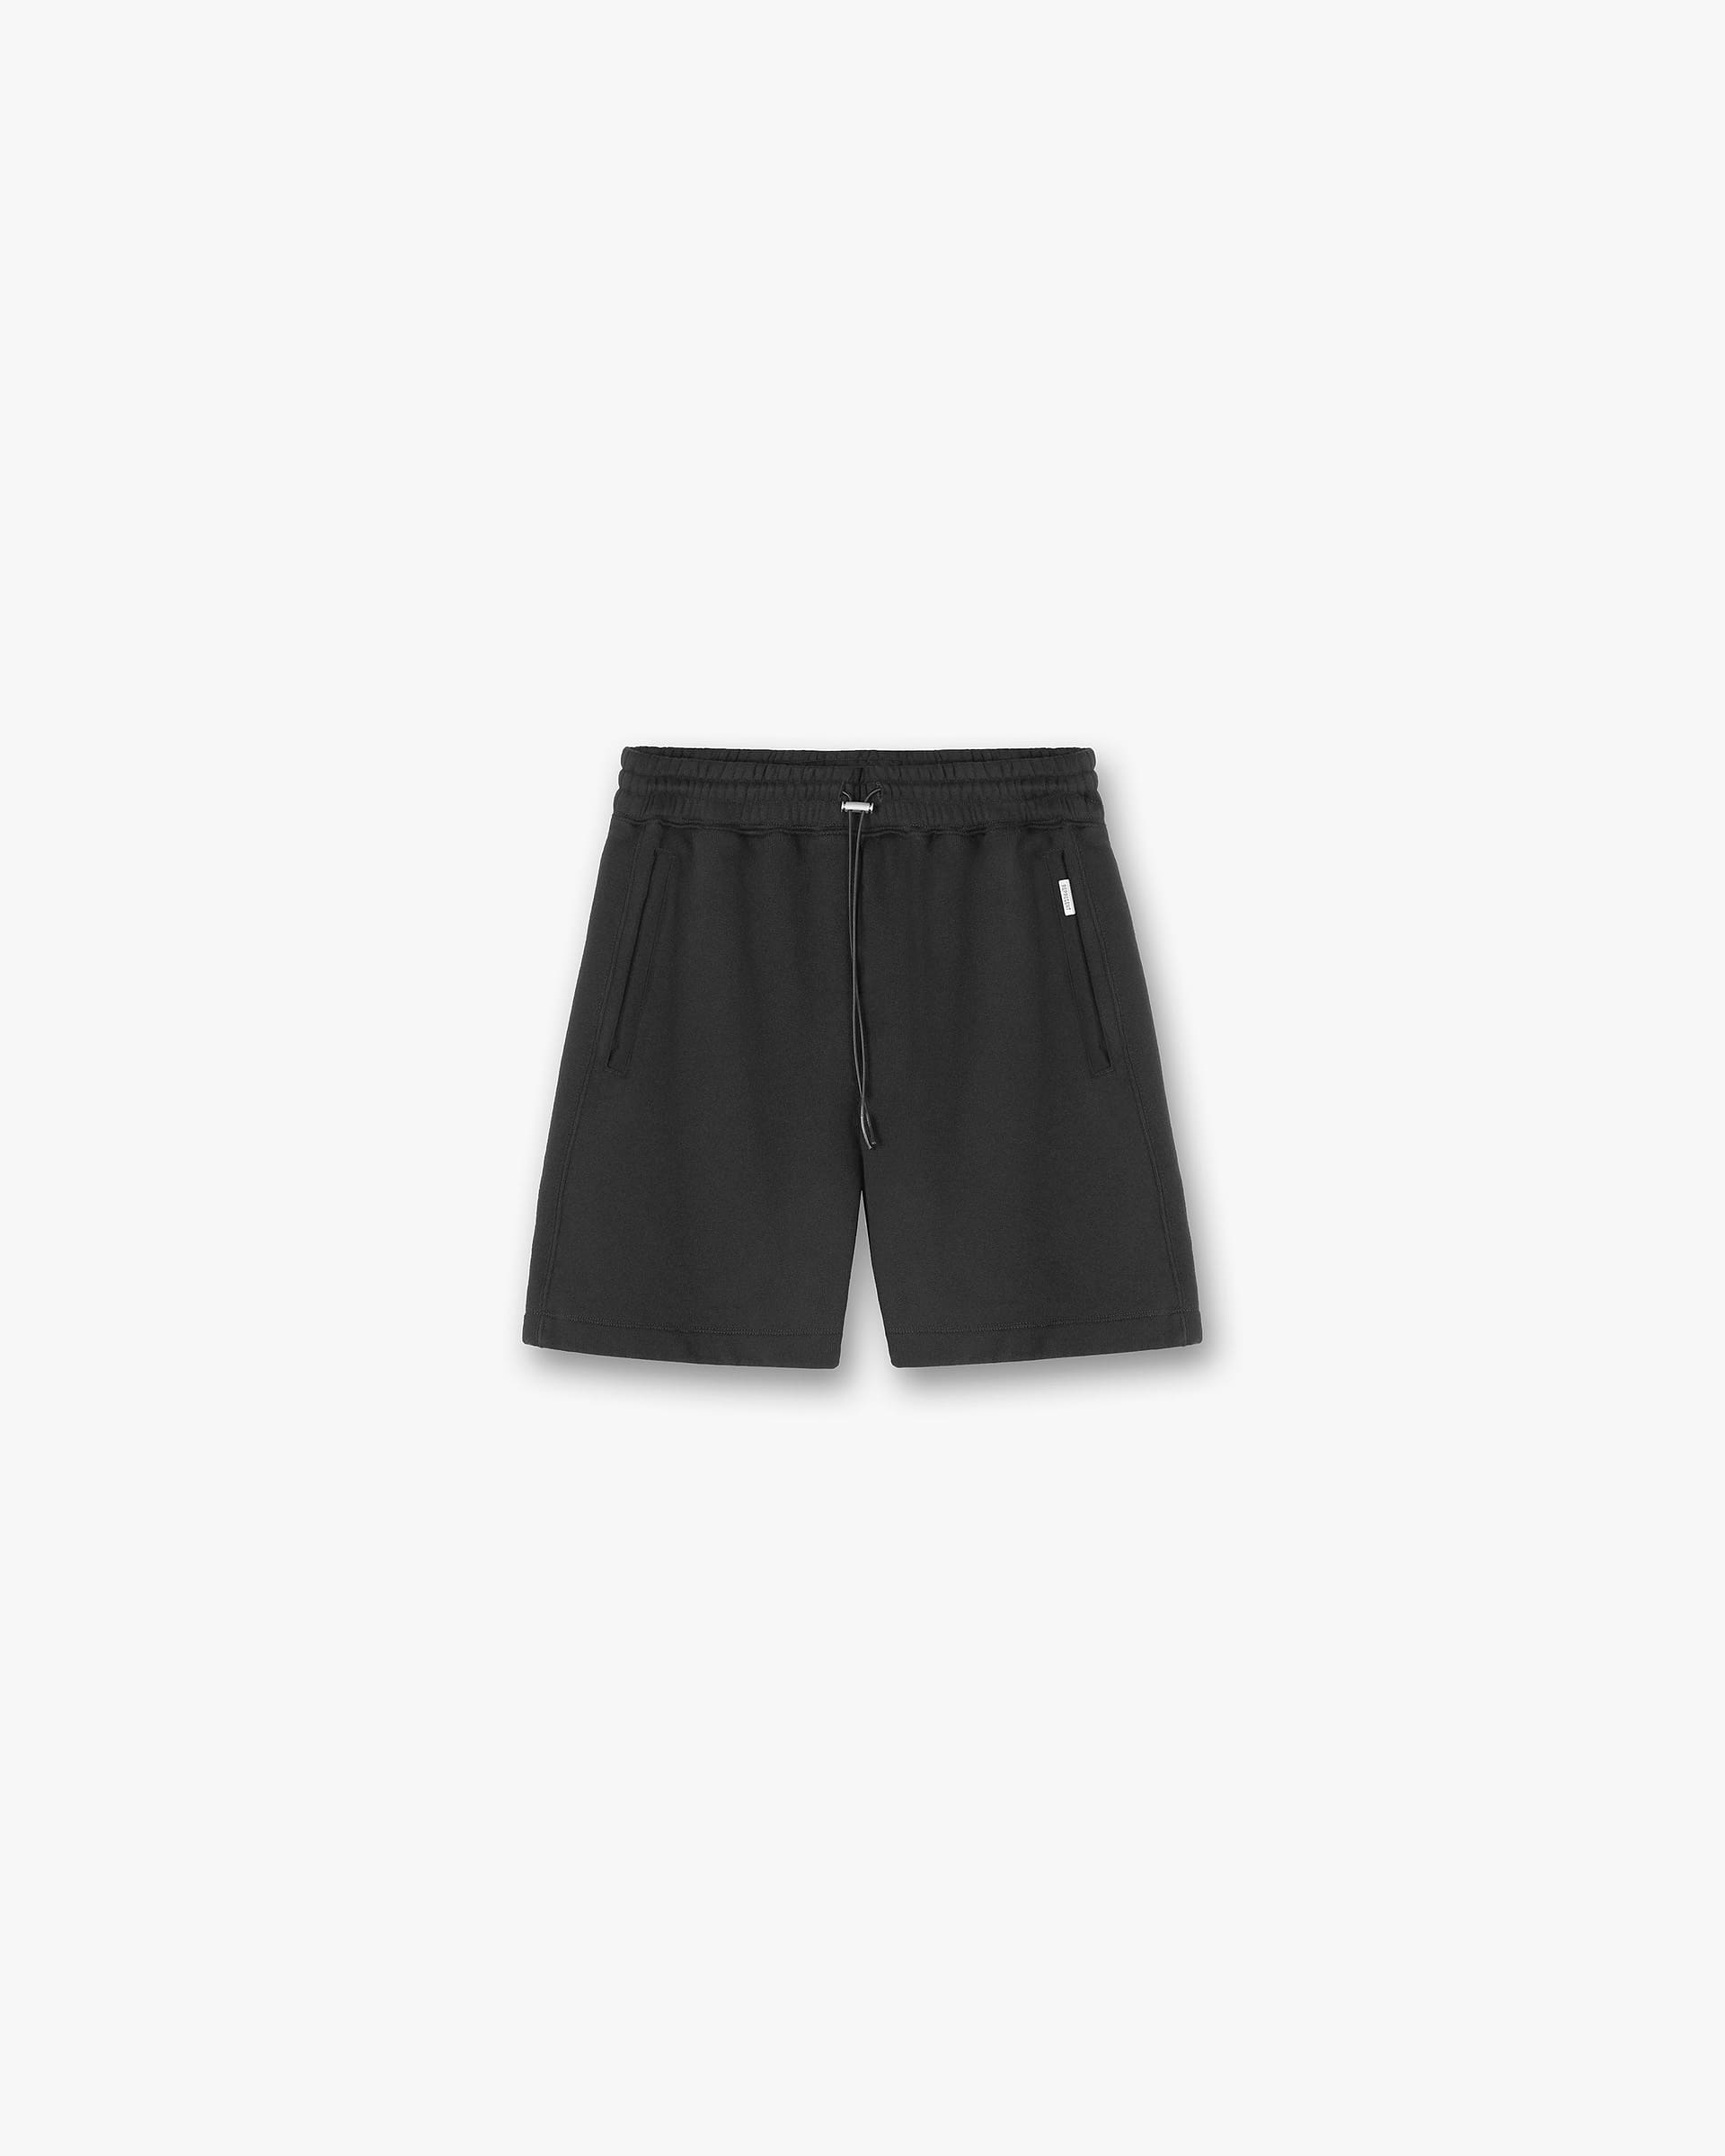 Blank Shorts | Off Black Shorts BLANKS | Represent Clo